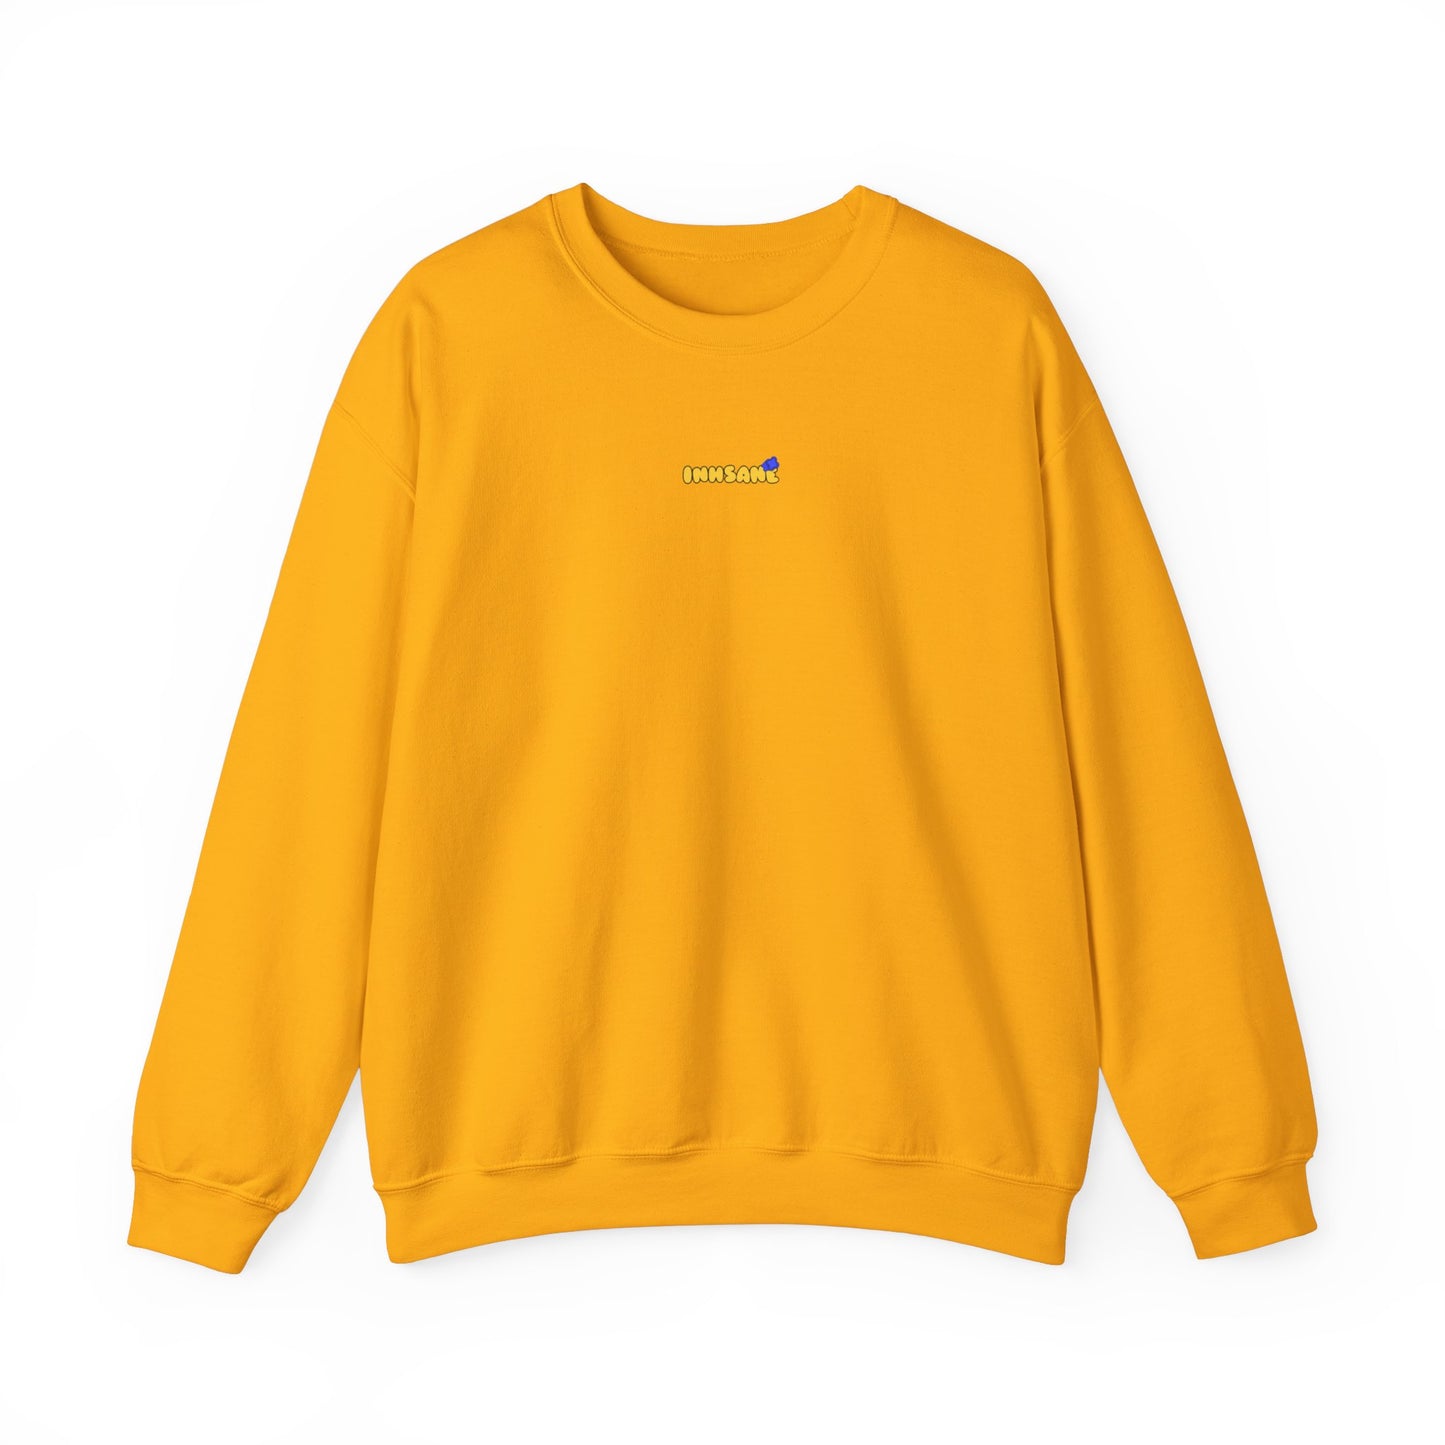 inhsane legacy v2 plain sweatshirt